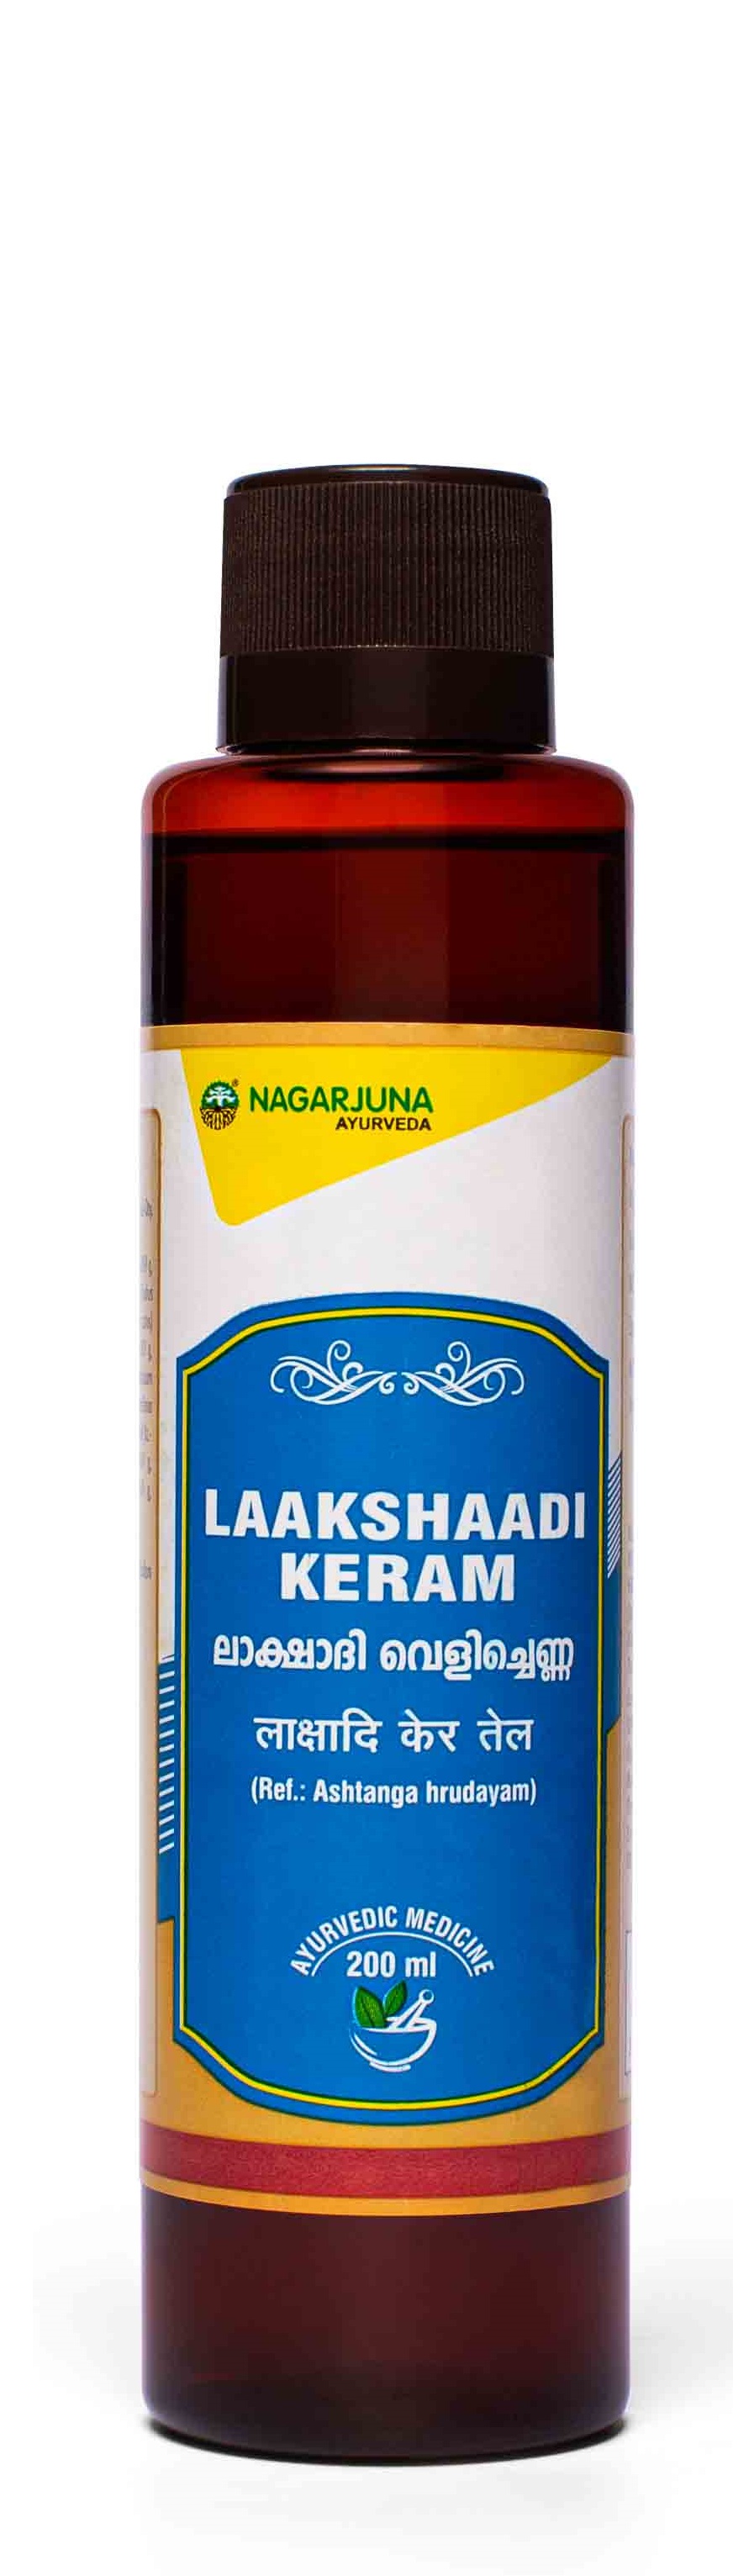 LAAKSHAADI KERAM, Nagarjuna (ЛААКШААДИ КЕРАМ Аюрведическое масло, Нагарджуна), 200 мл.